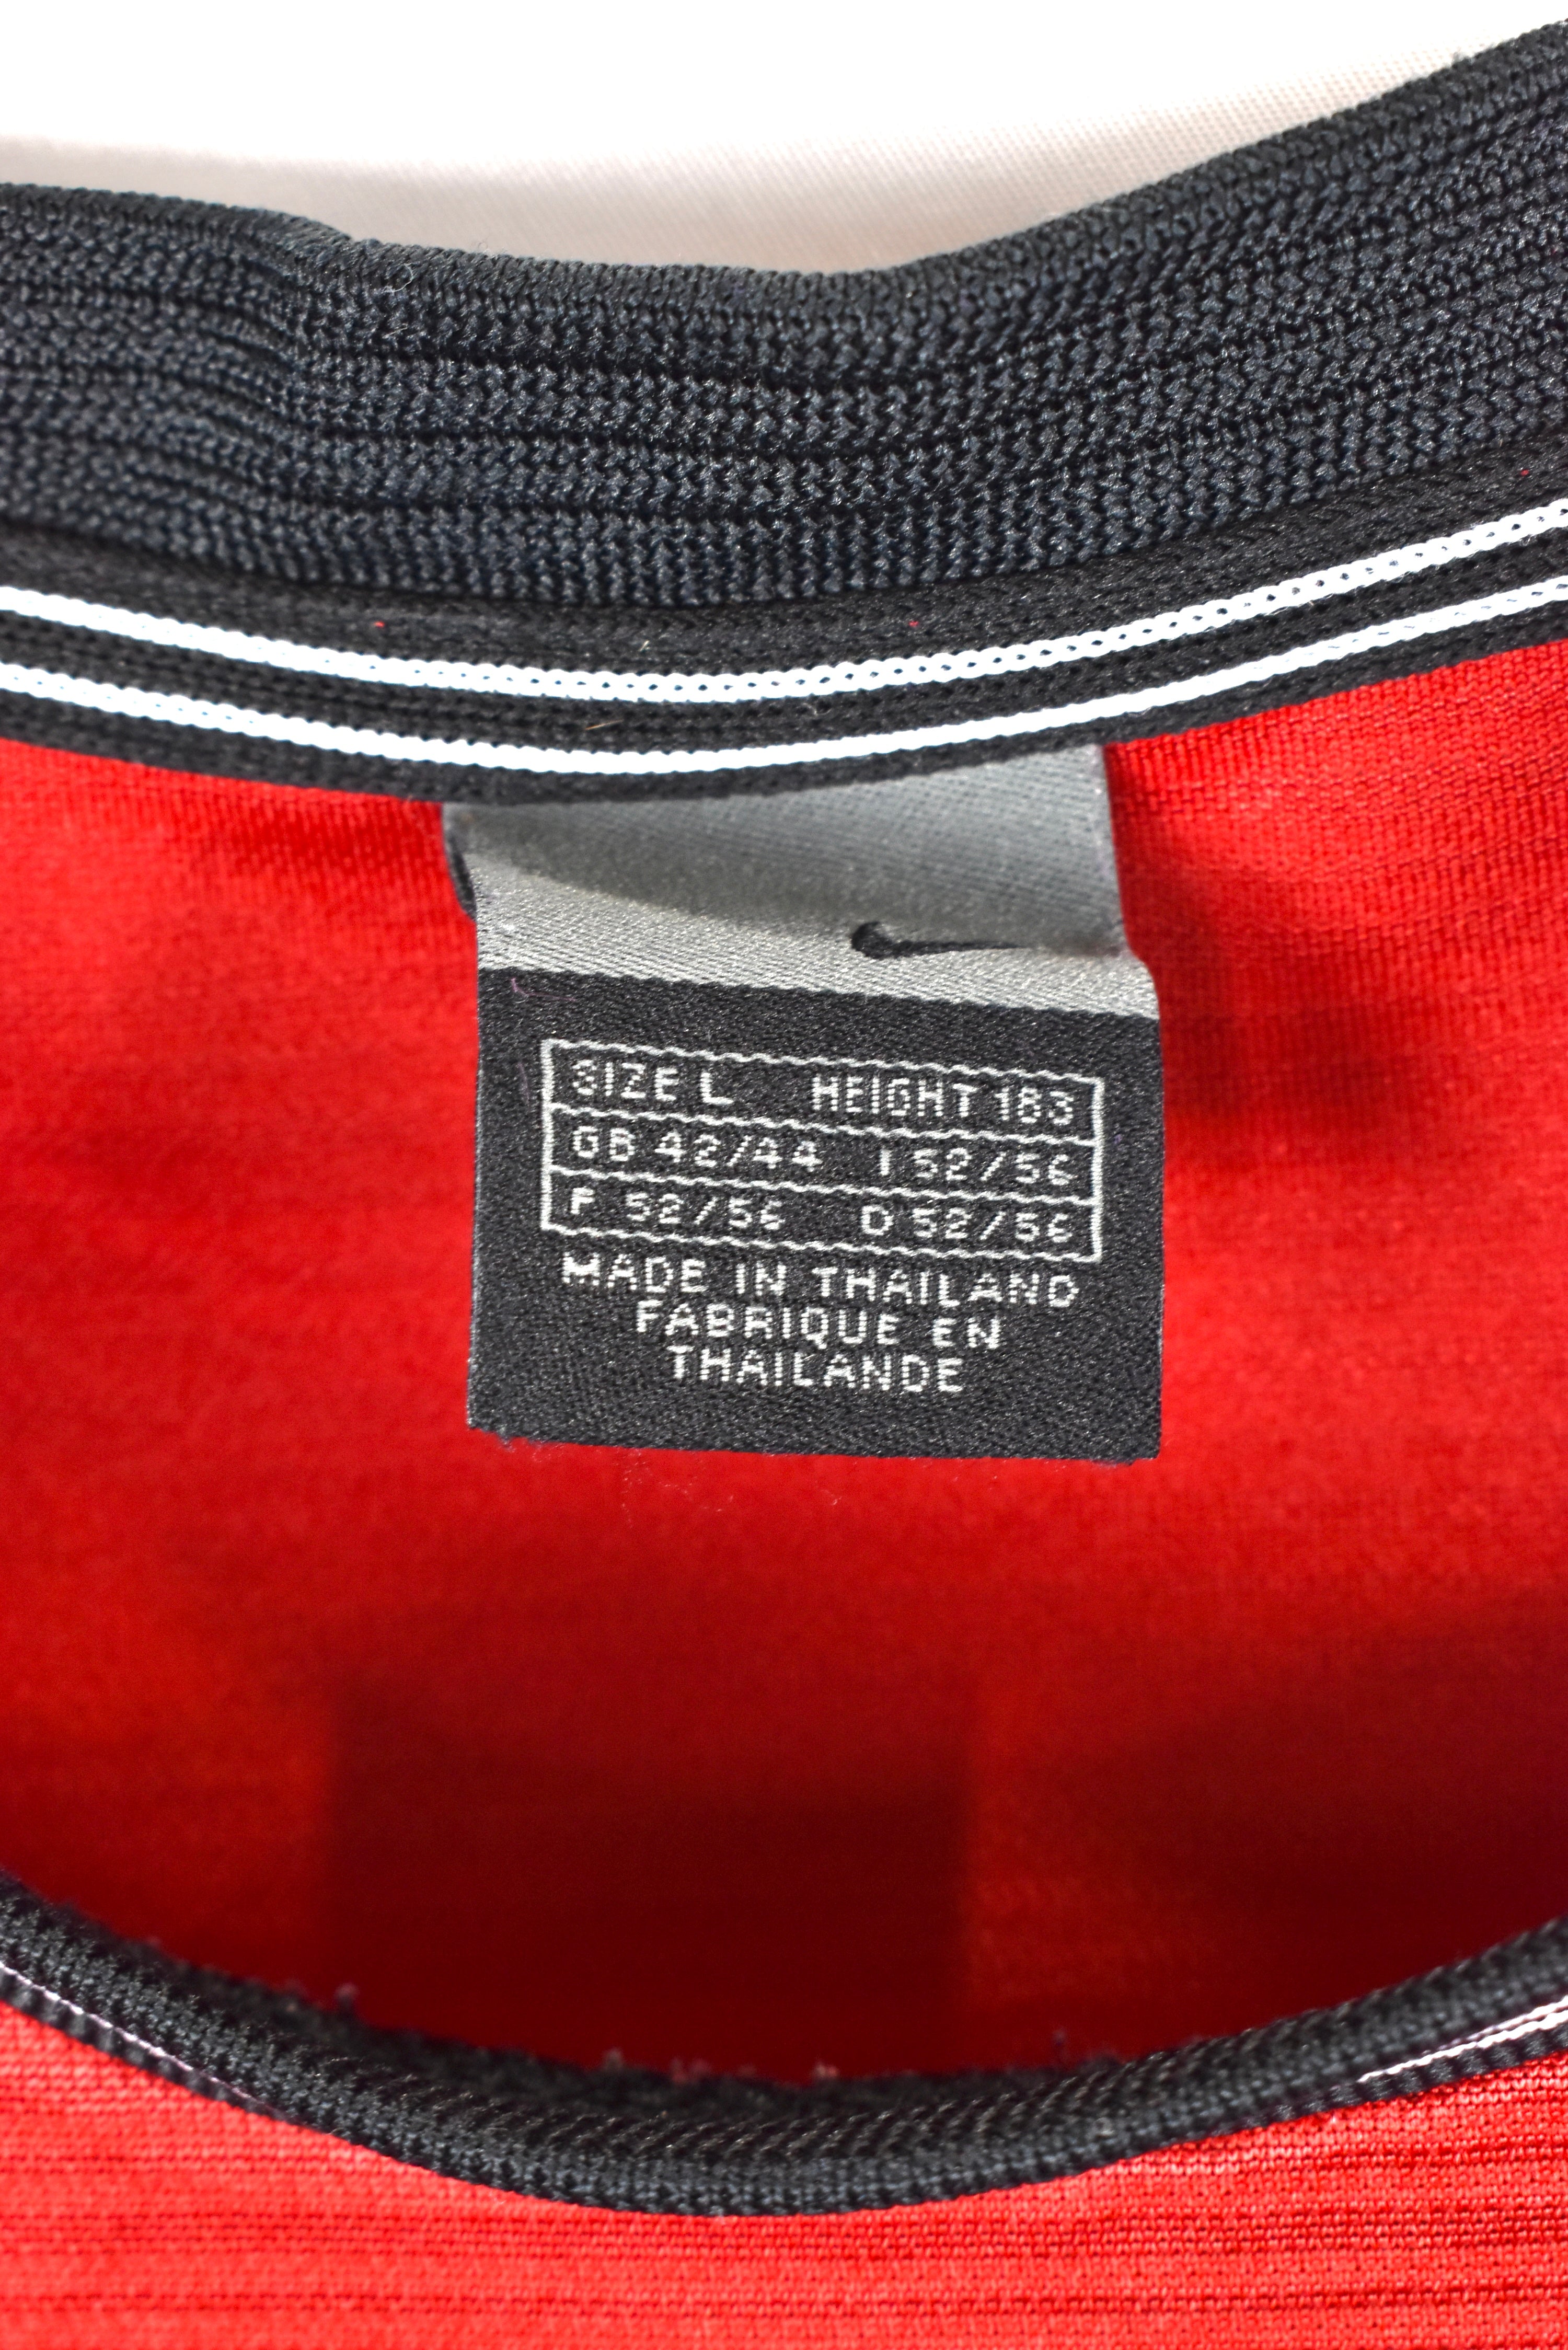 Vintage Nike shirt, red embroidered tee - AU L NIKE